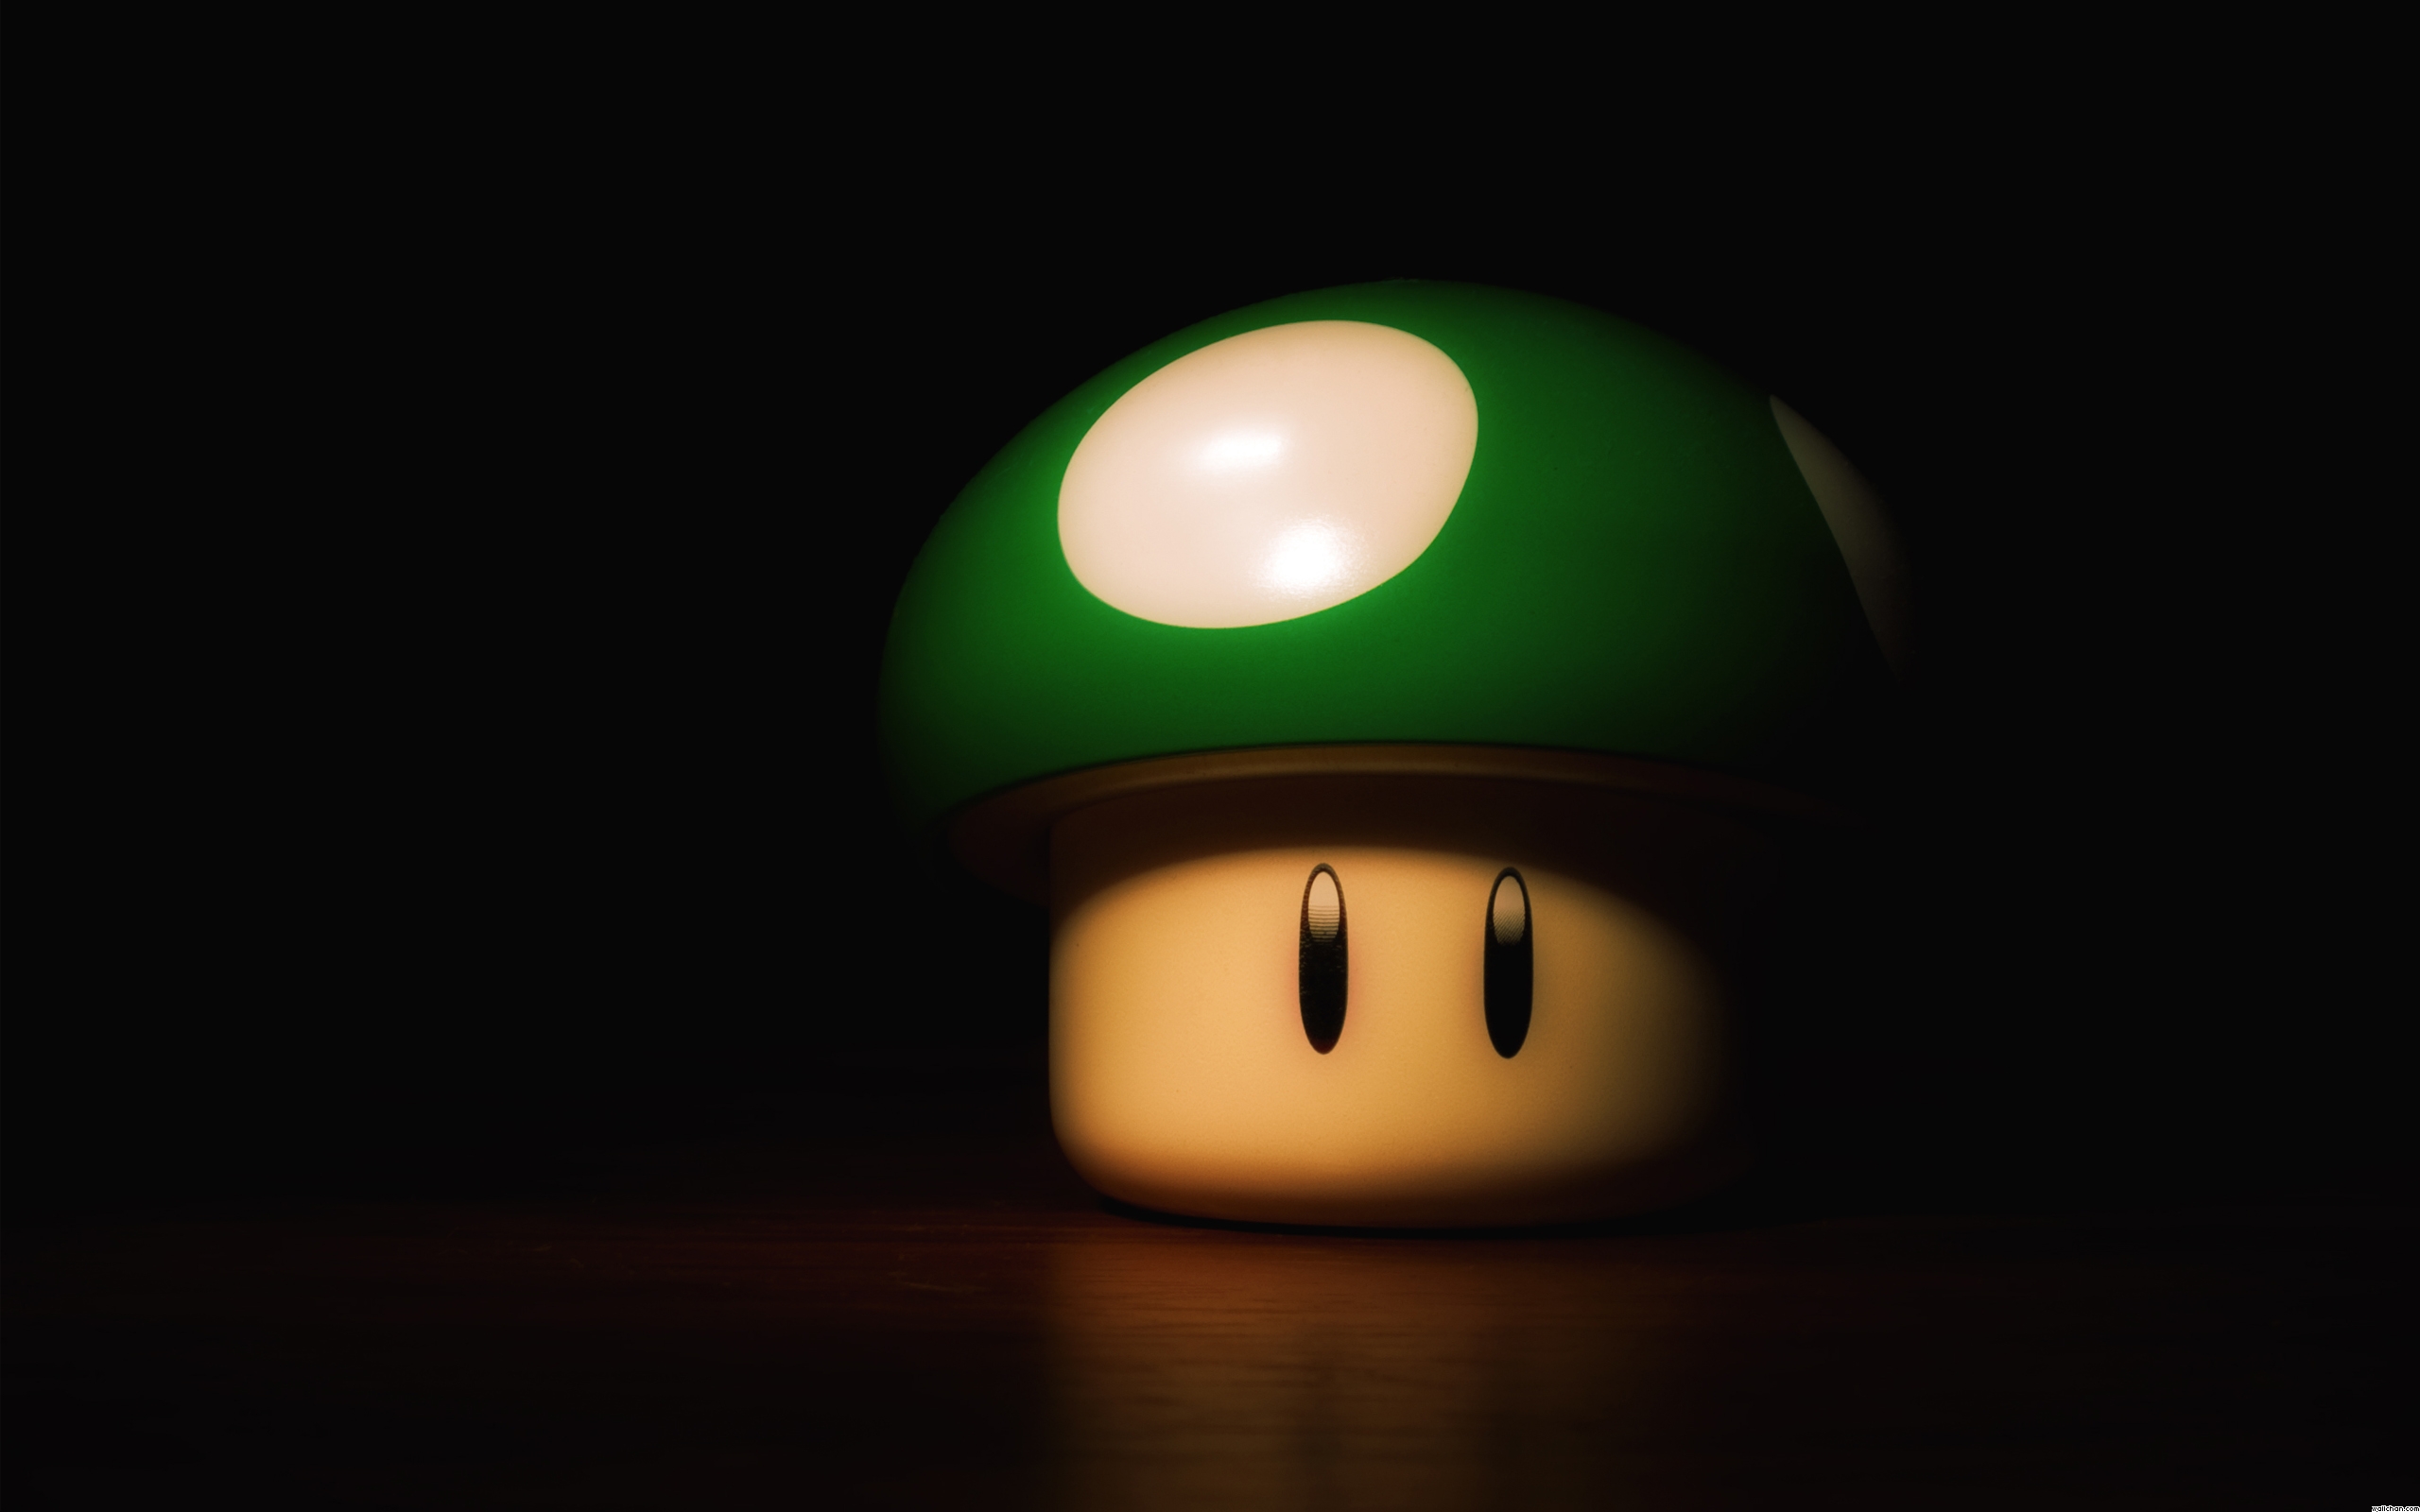 General 2560x1600 Mario Bros. Super Mario video game characters watermarked digital art simple background green low light minimalism